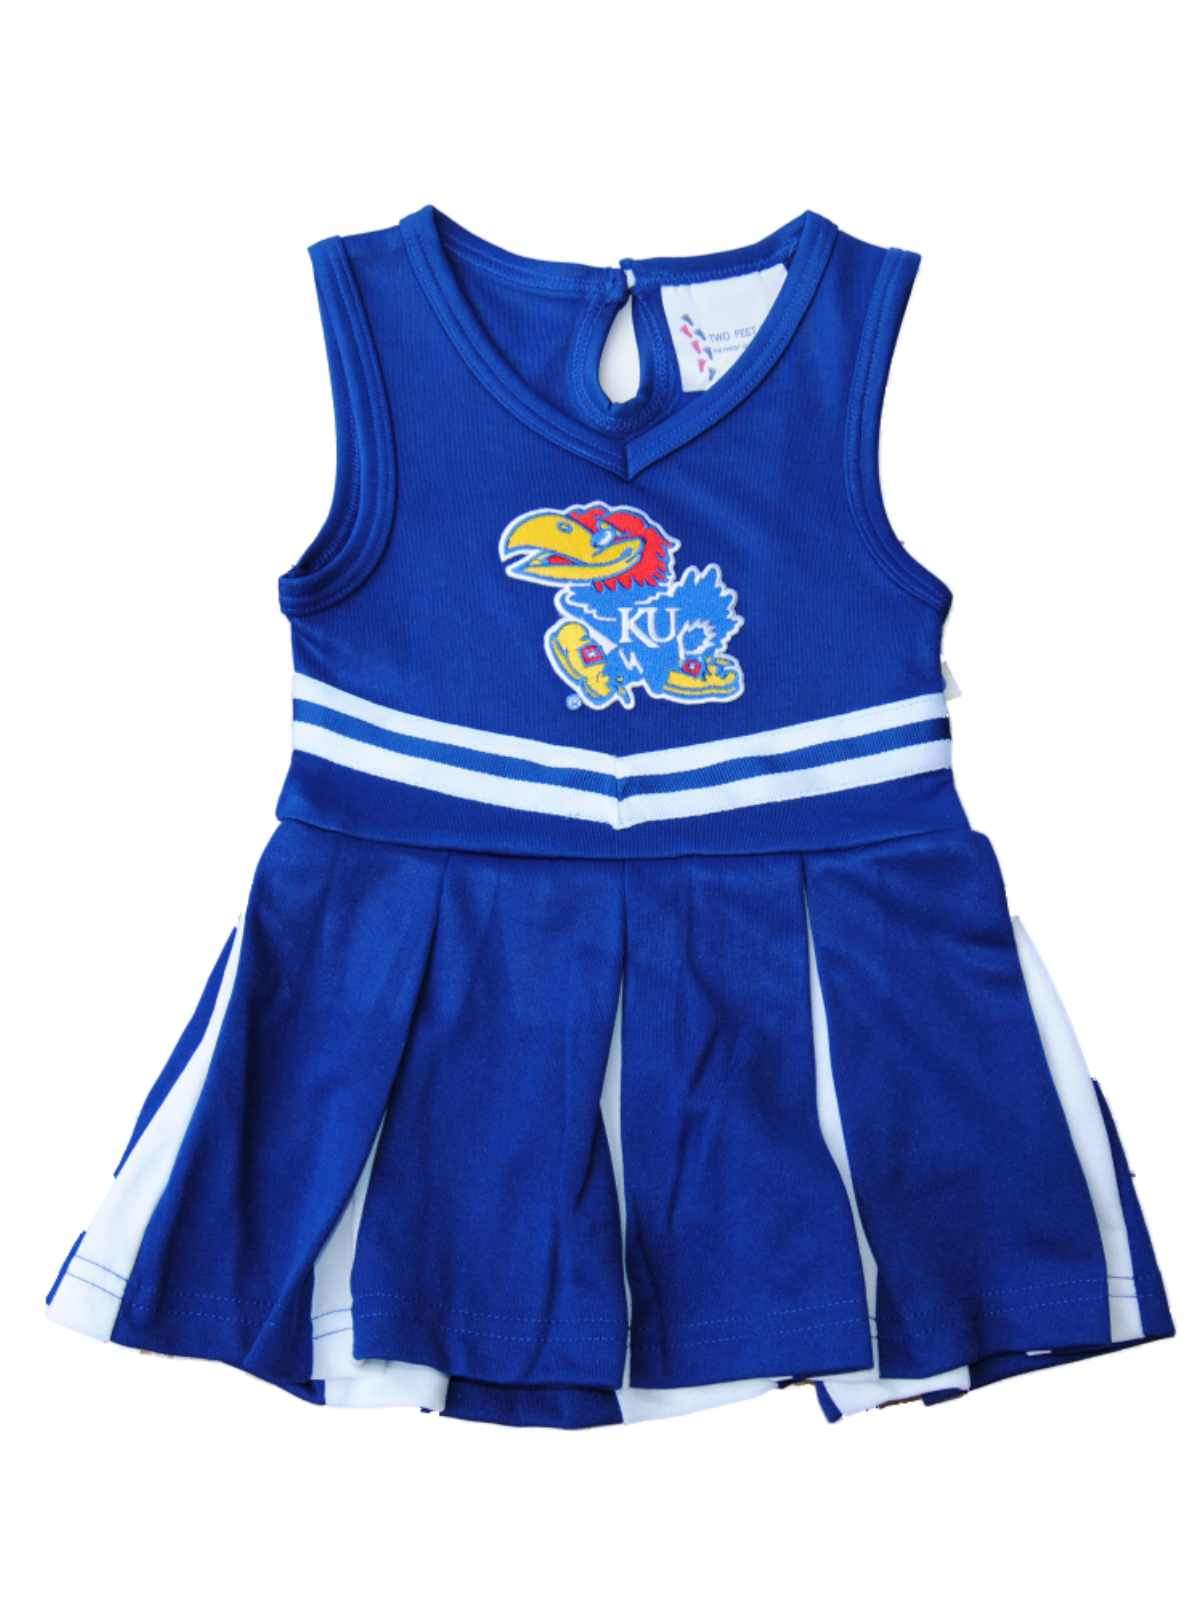 Kansas Jayhawks TFA Youth Baby Toddler Blue Dress Up Cheerleading Outfit